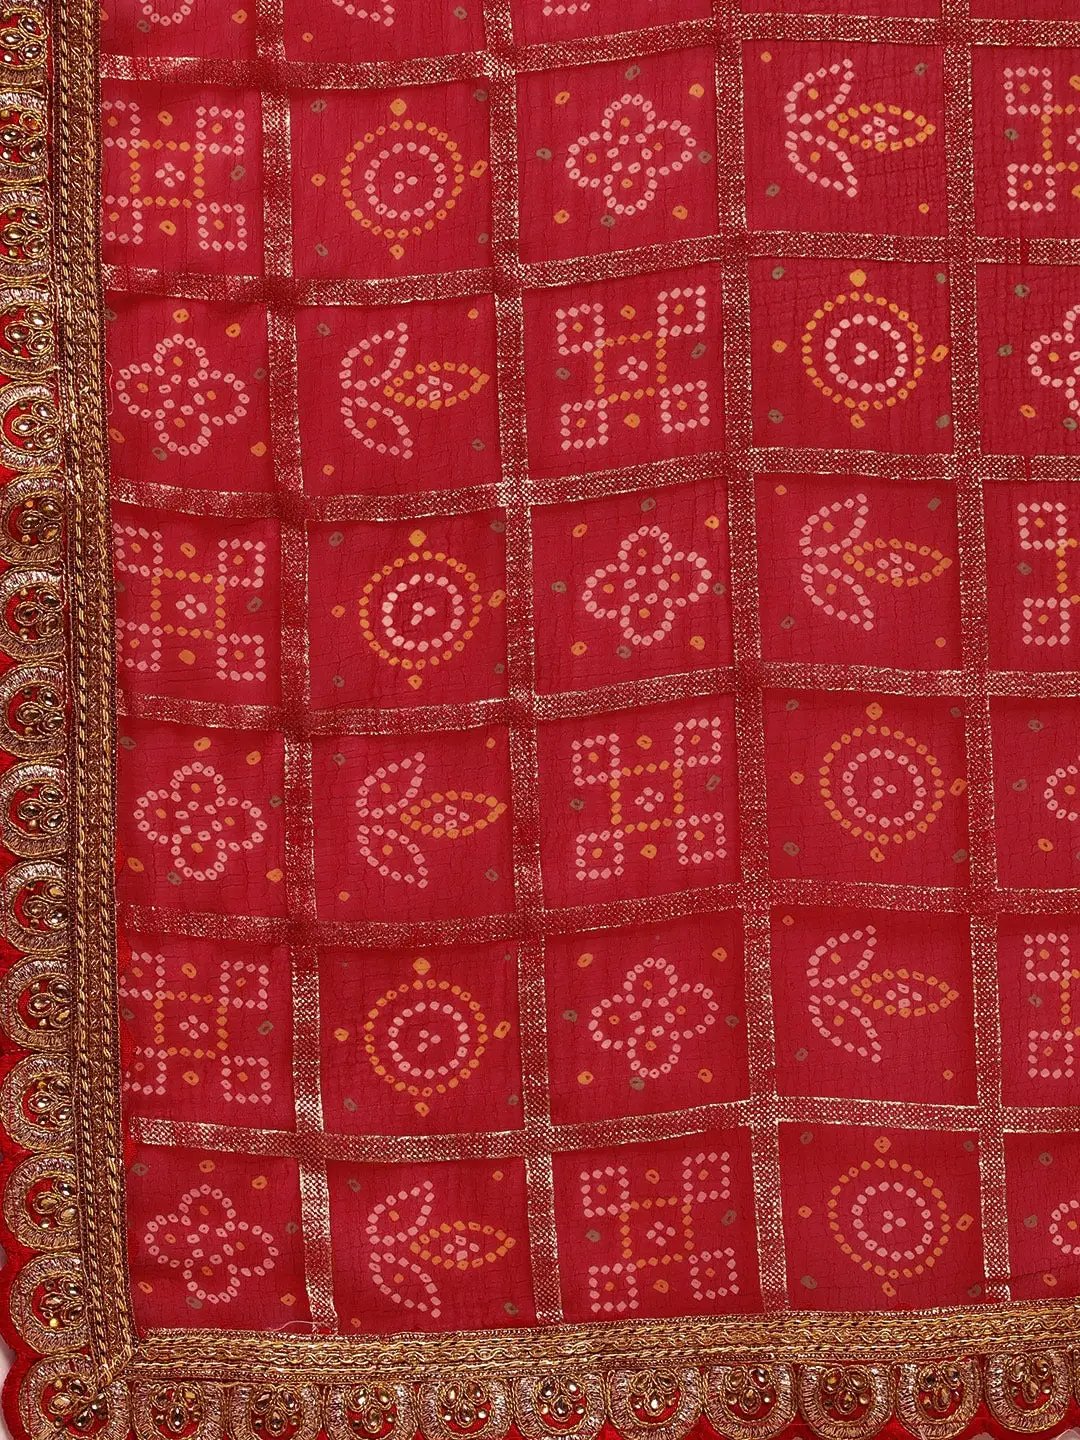 Beautiful Bandhani Printed Saree with Embellished Border